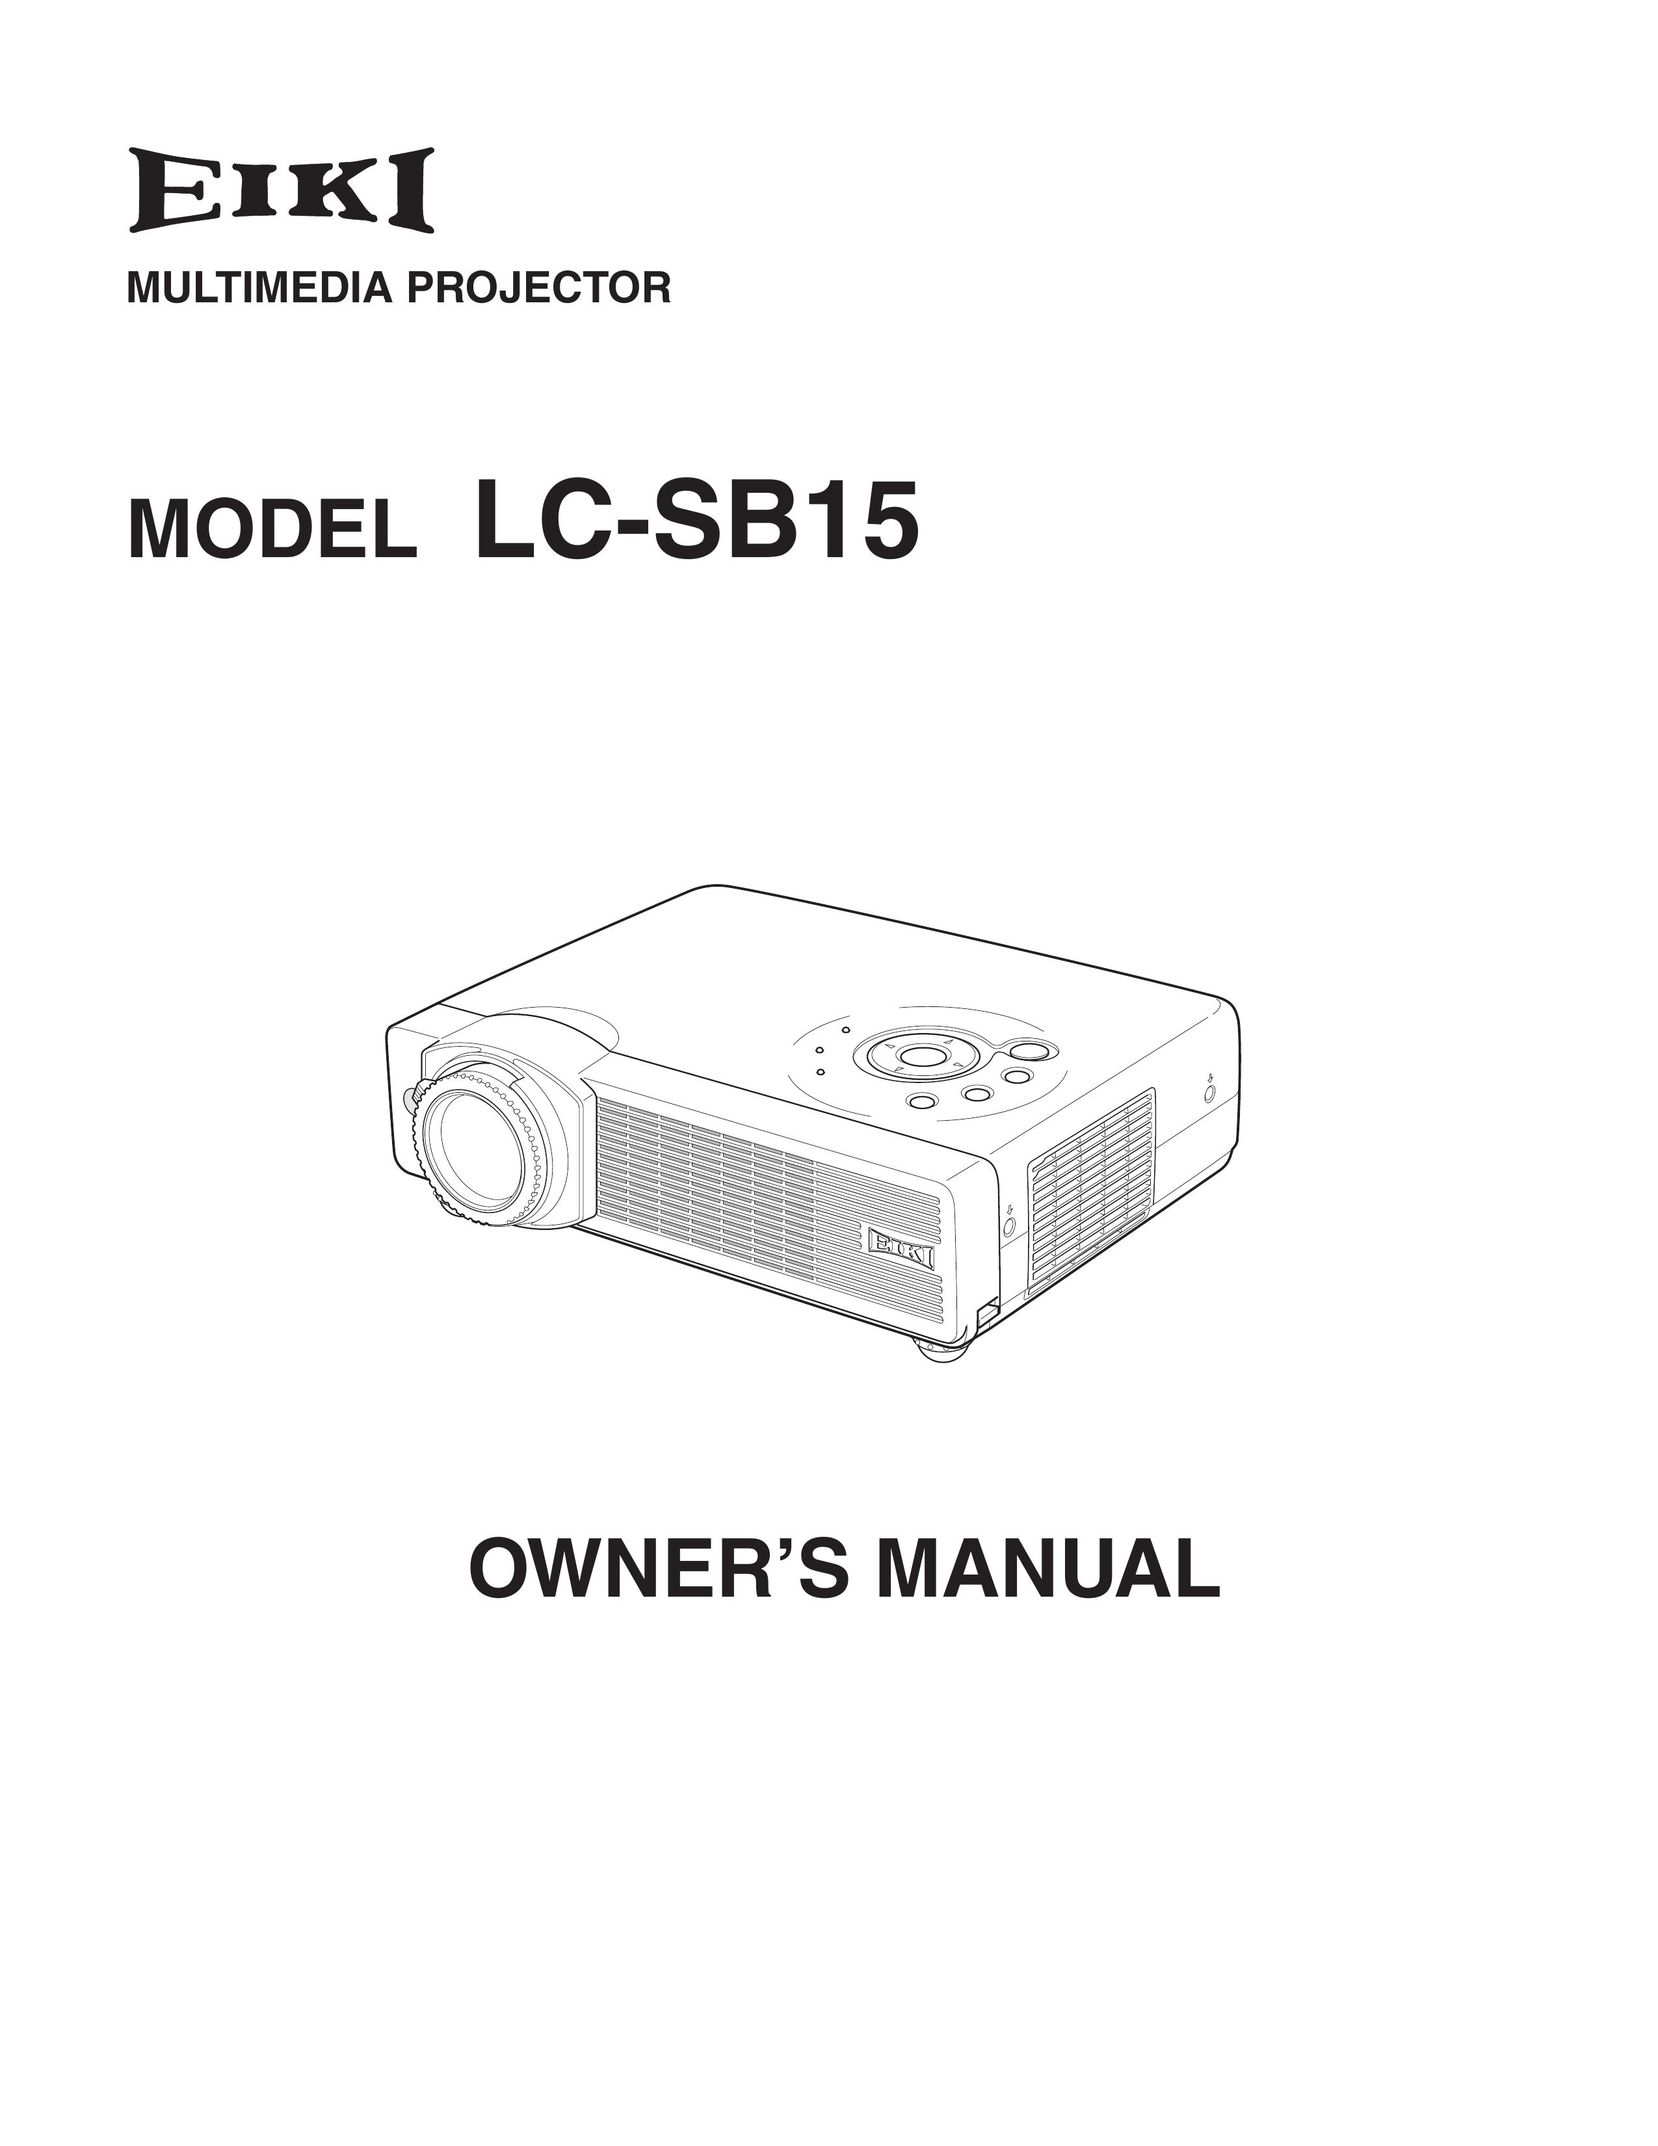 Eiki LC-SB15 CRT Television User Manual